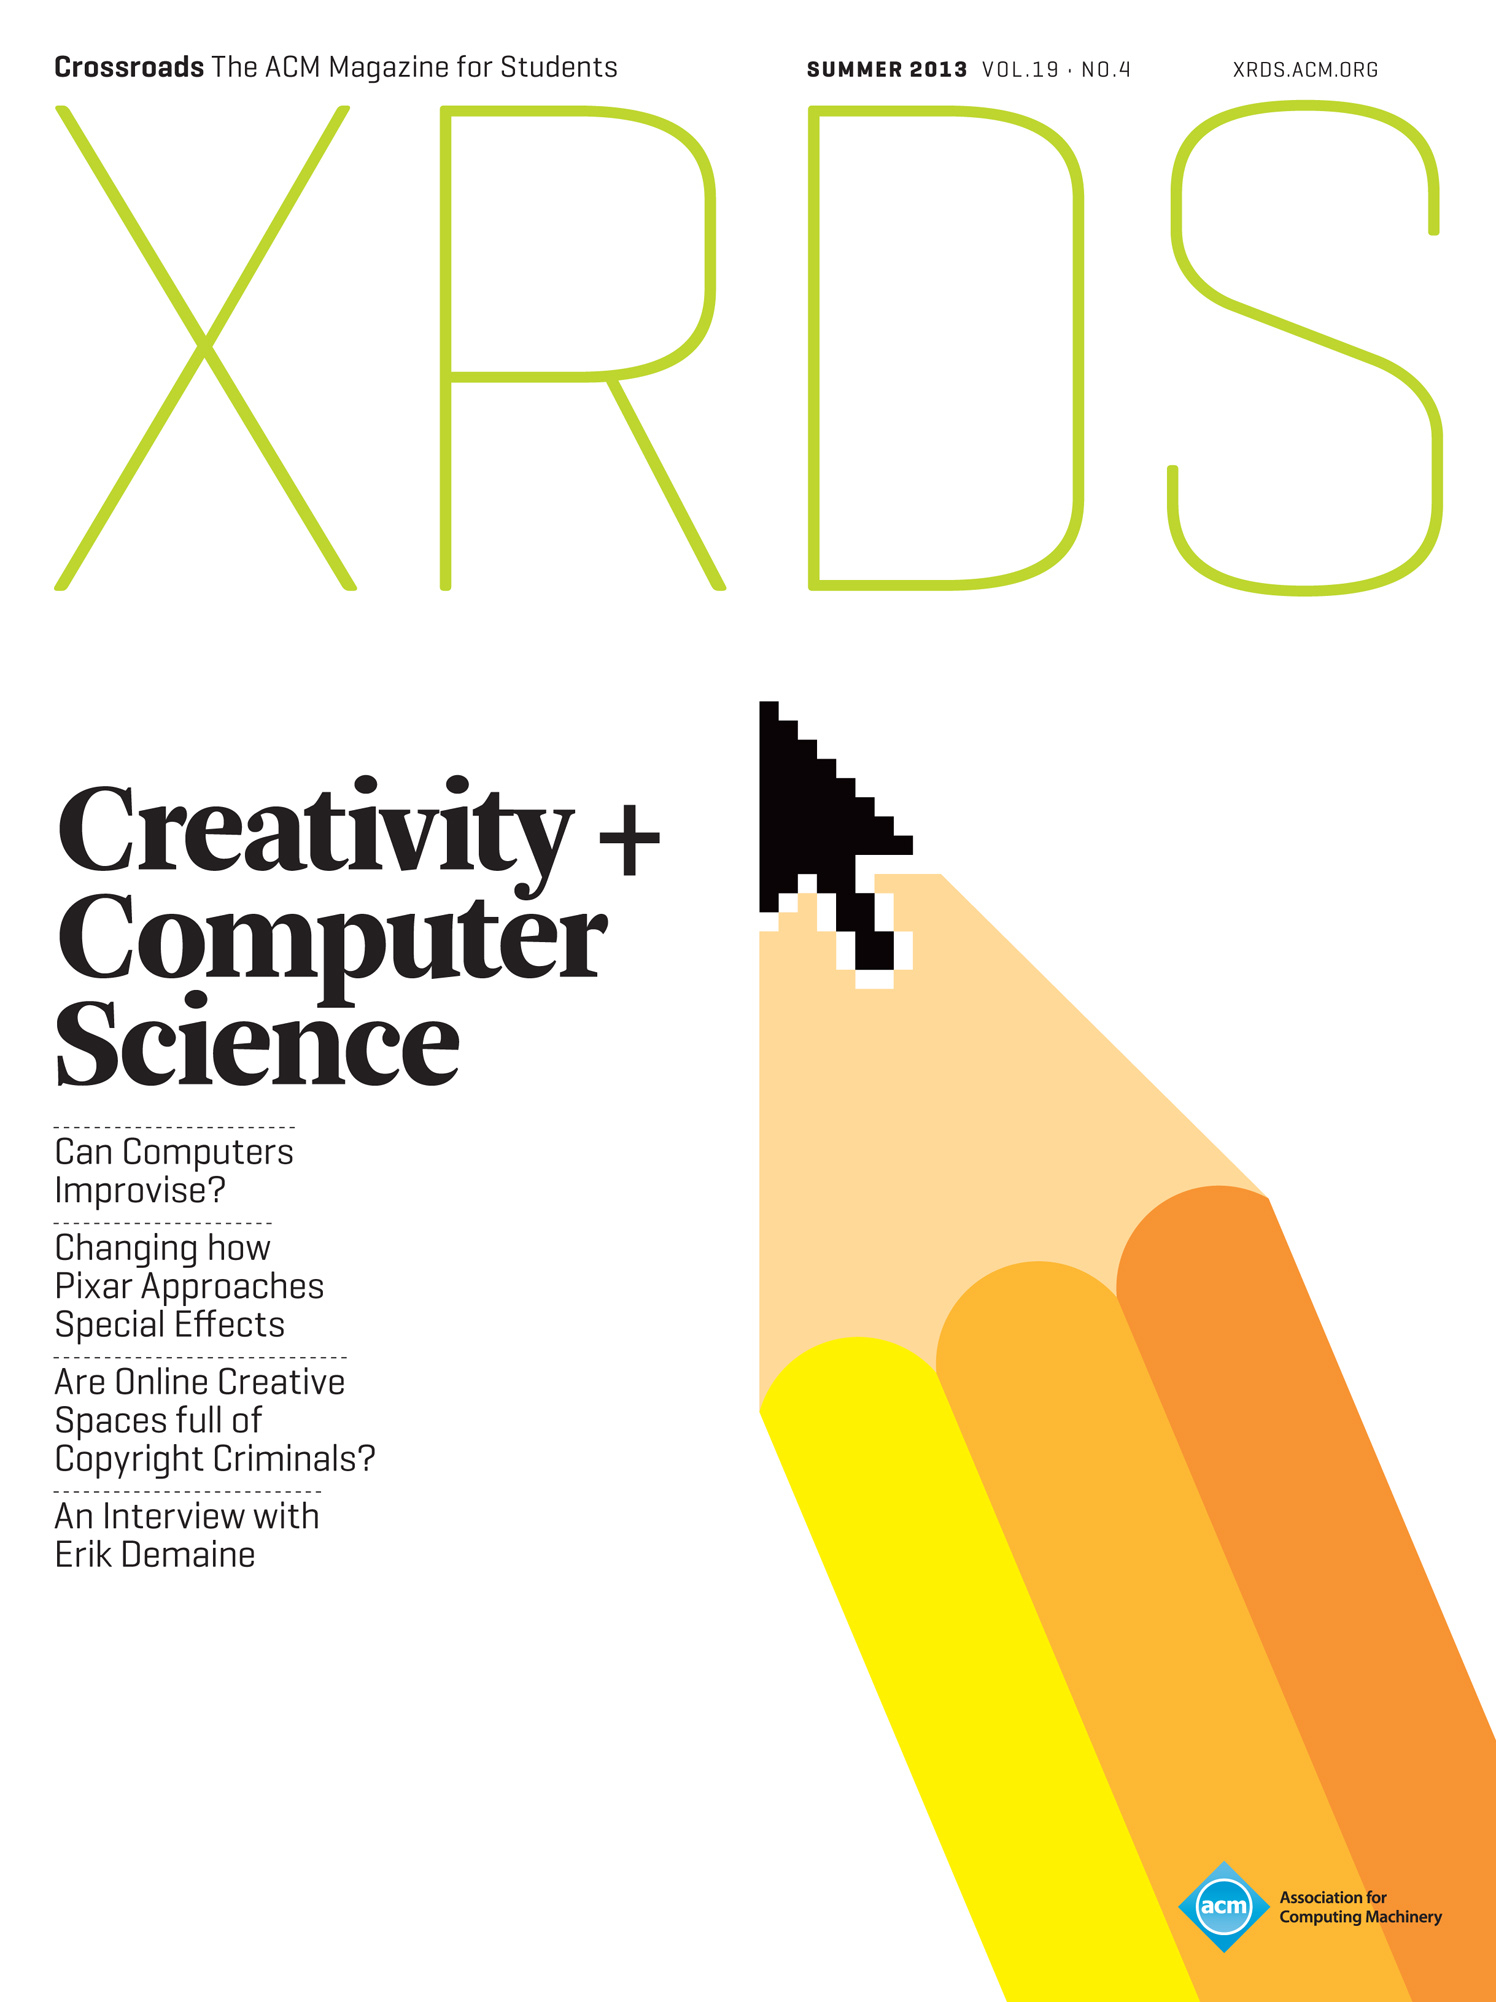 Creativity + Computer Science / XRDS Magazine